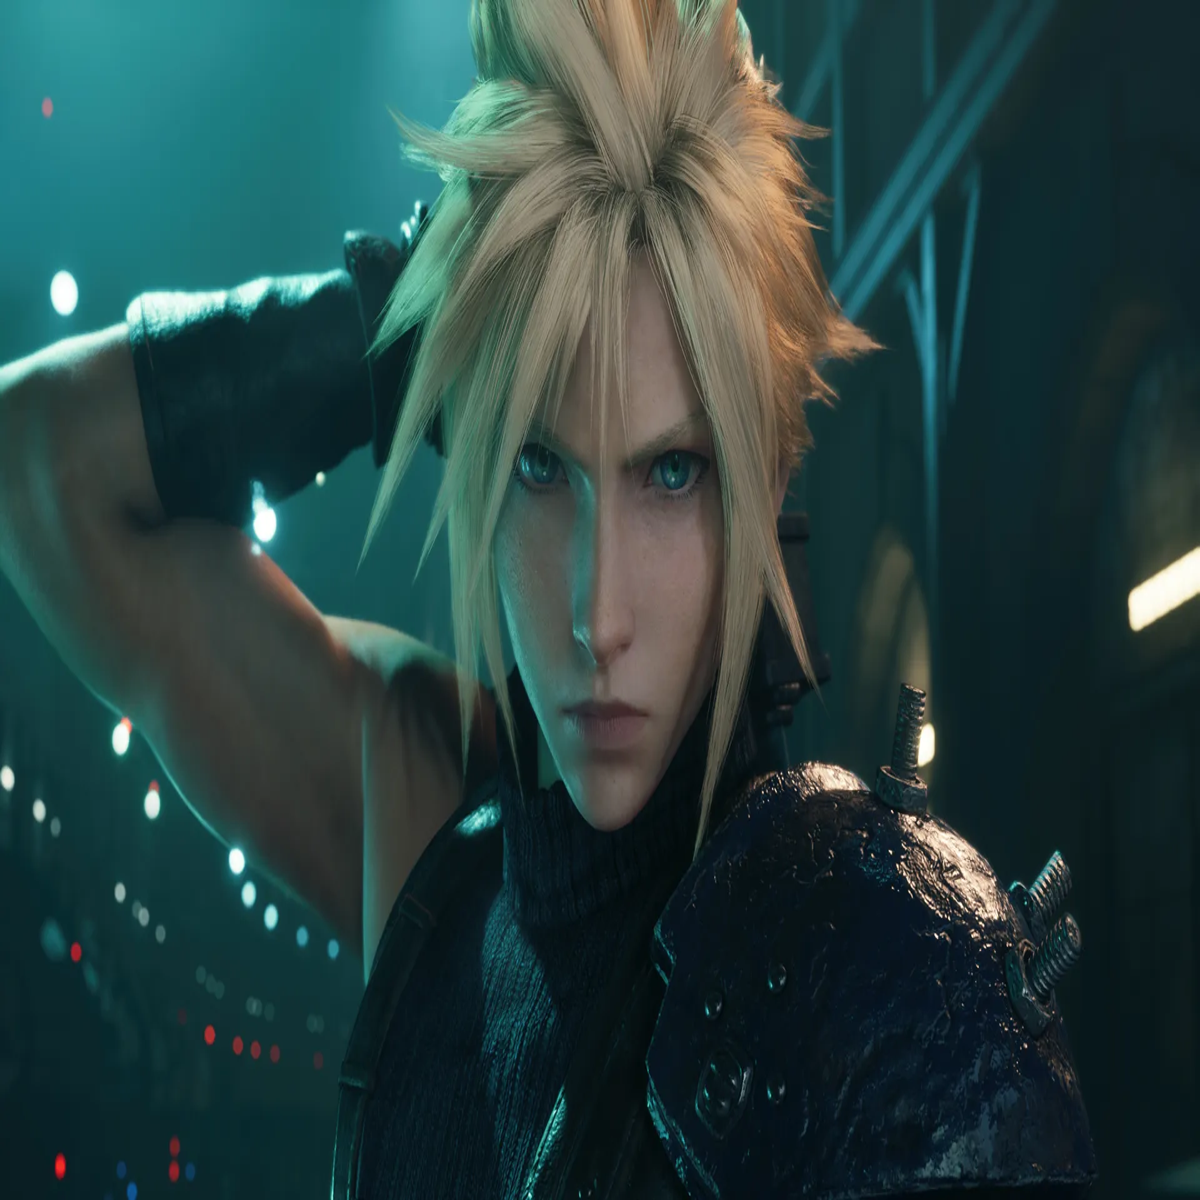 Final Fantasy VII Remake Part 2 is in Development, Square Enix Confirms